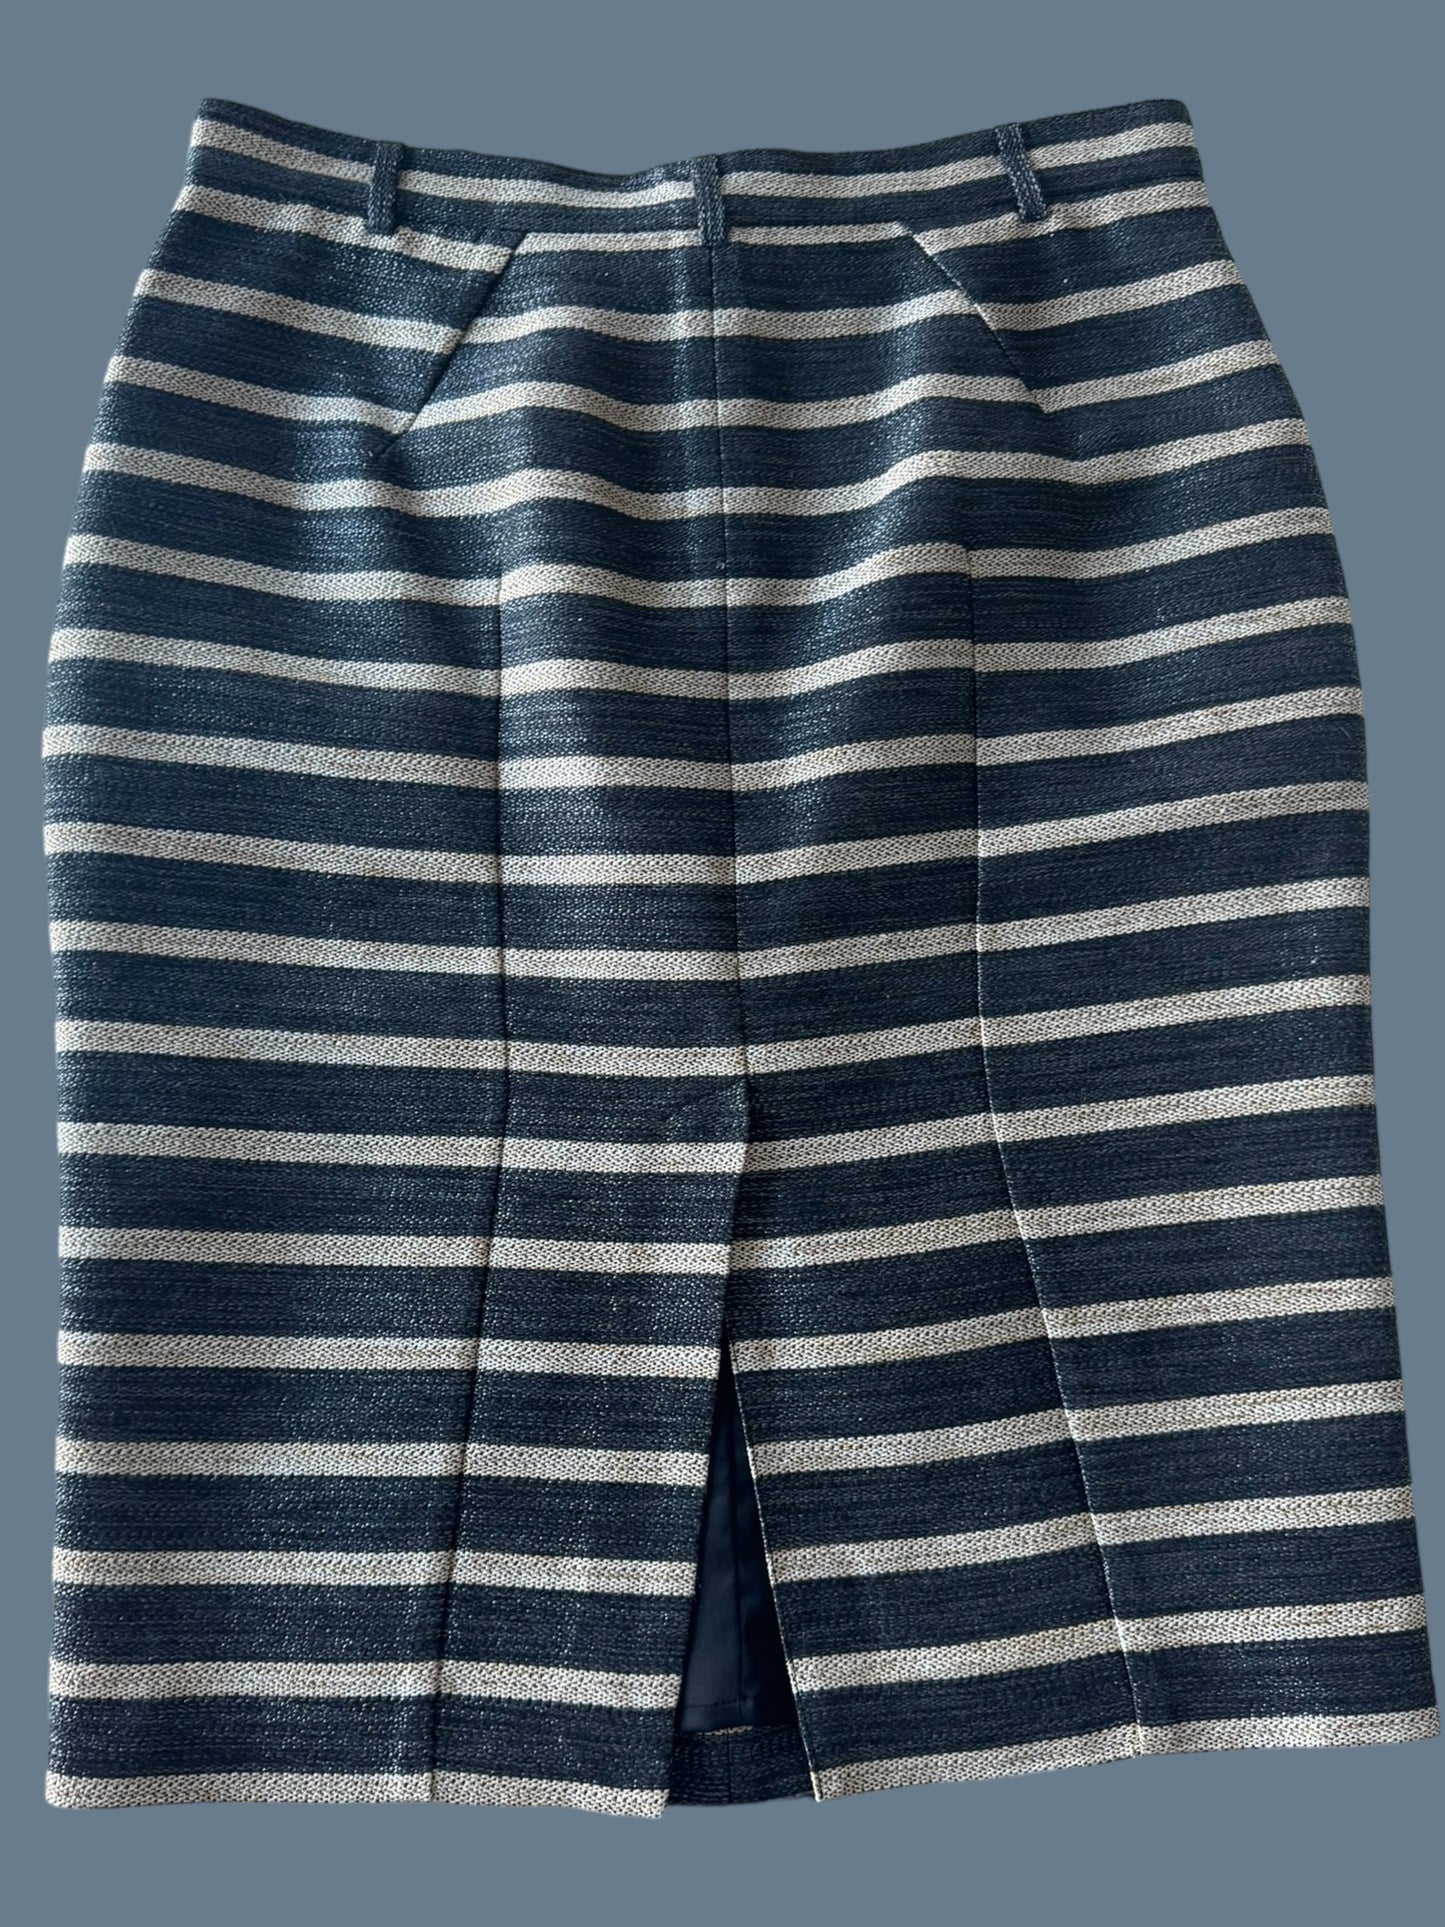 ARMANI COLLEZIONE skirt size large